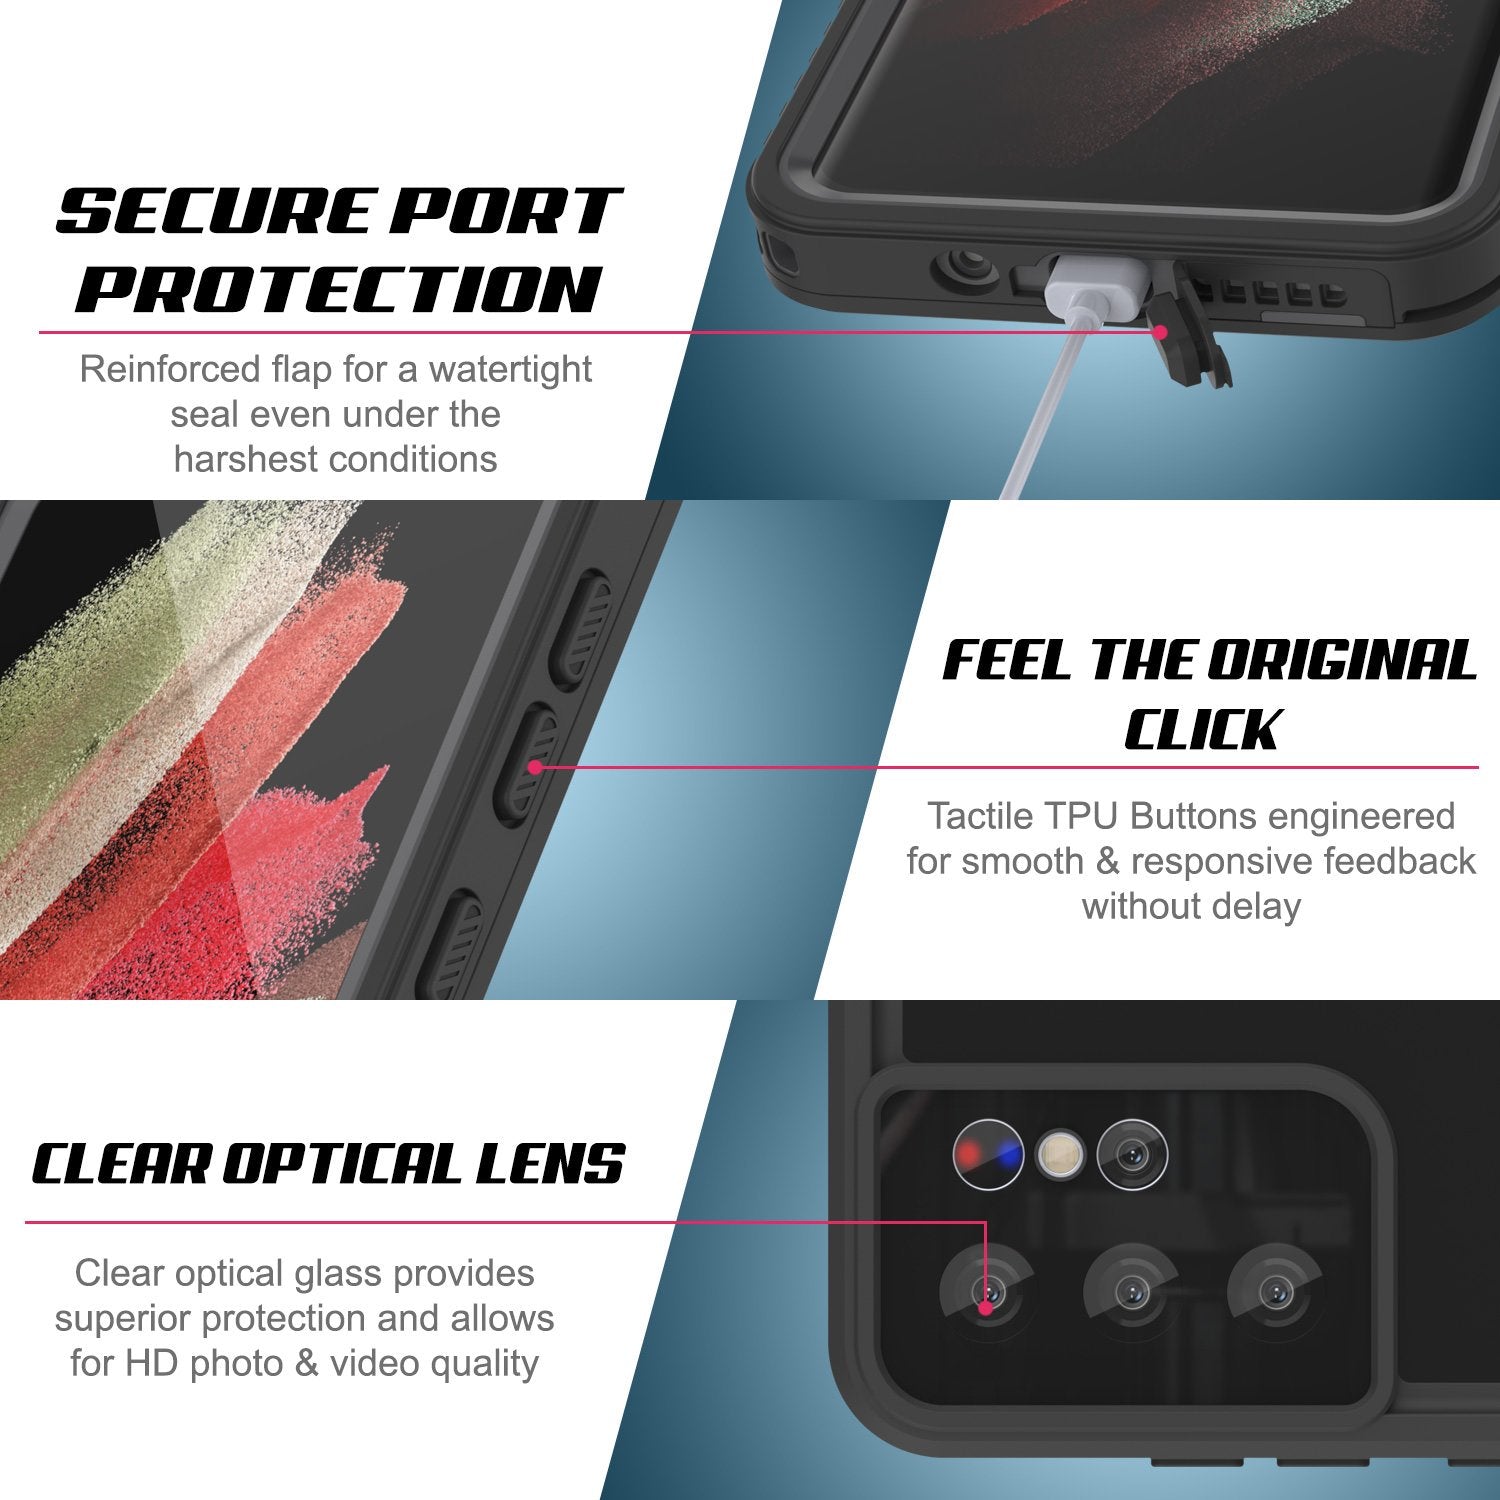 Galaxy S21 Ultra Waterproof Case PunkCase StudStar Black Thin 6.6ft Underwater IP68 Shock/Snow Proof